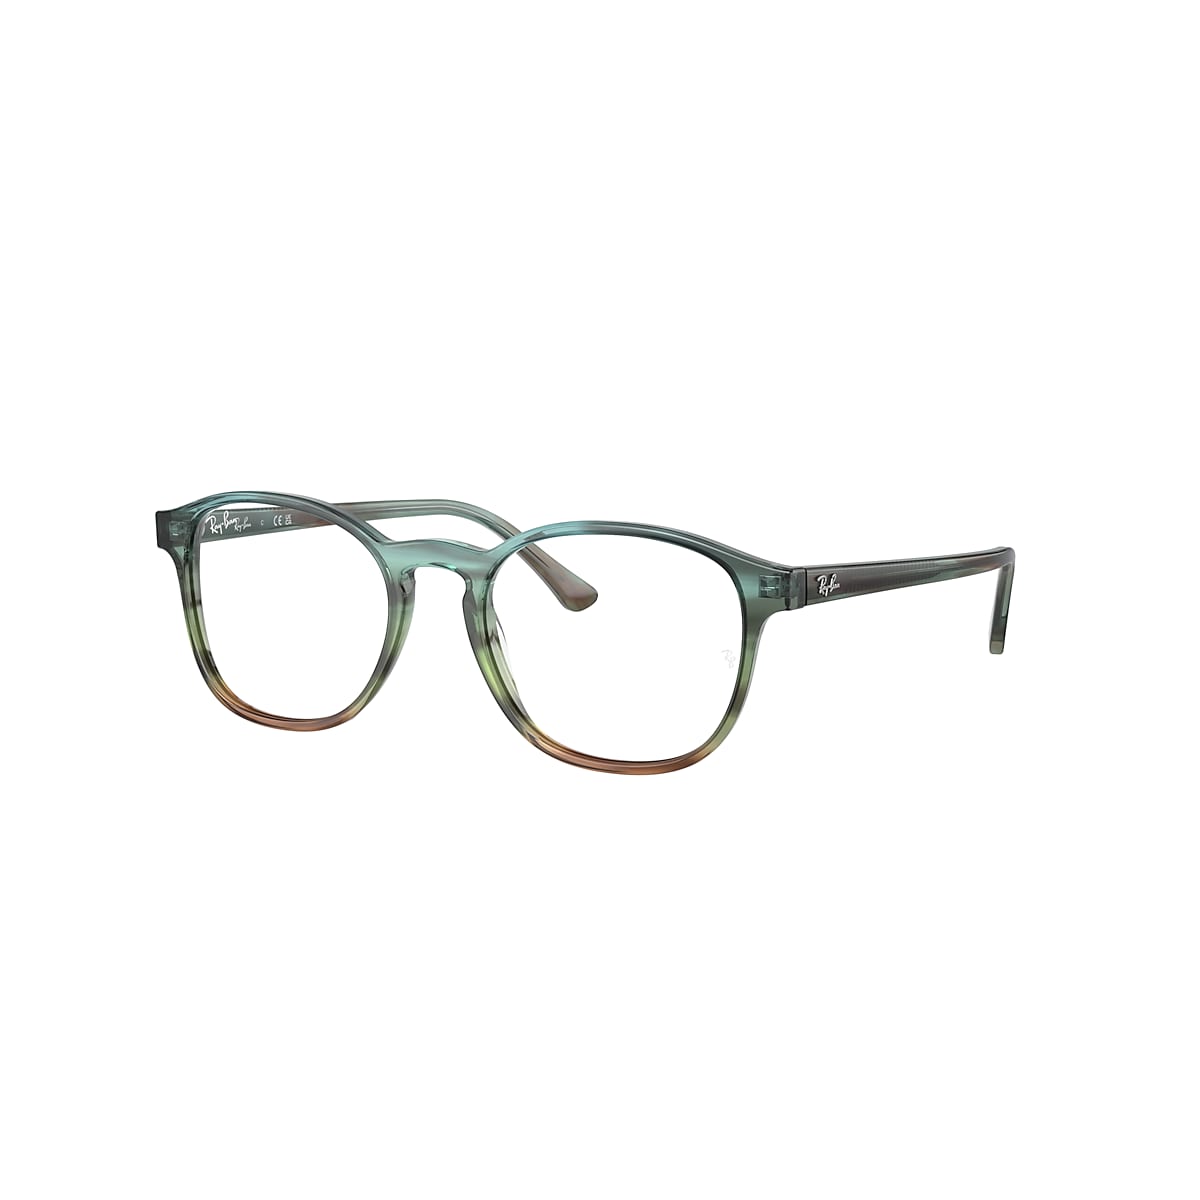 RB5417 OPTICS Eyeglasses with Striped Blue & Green Frame 